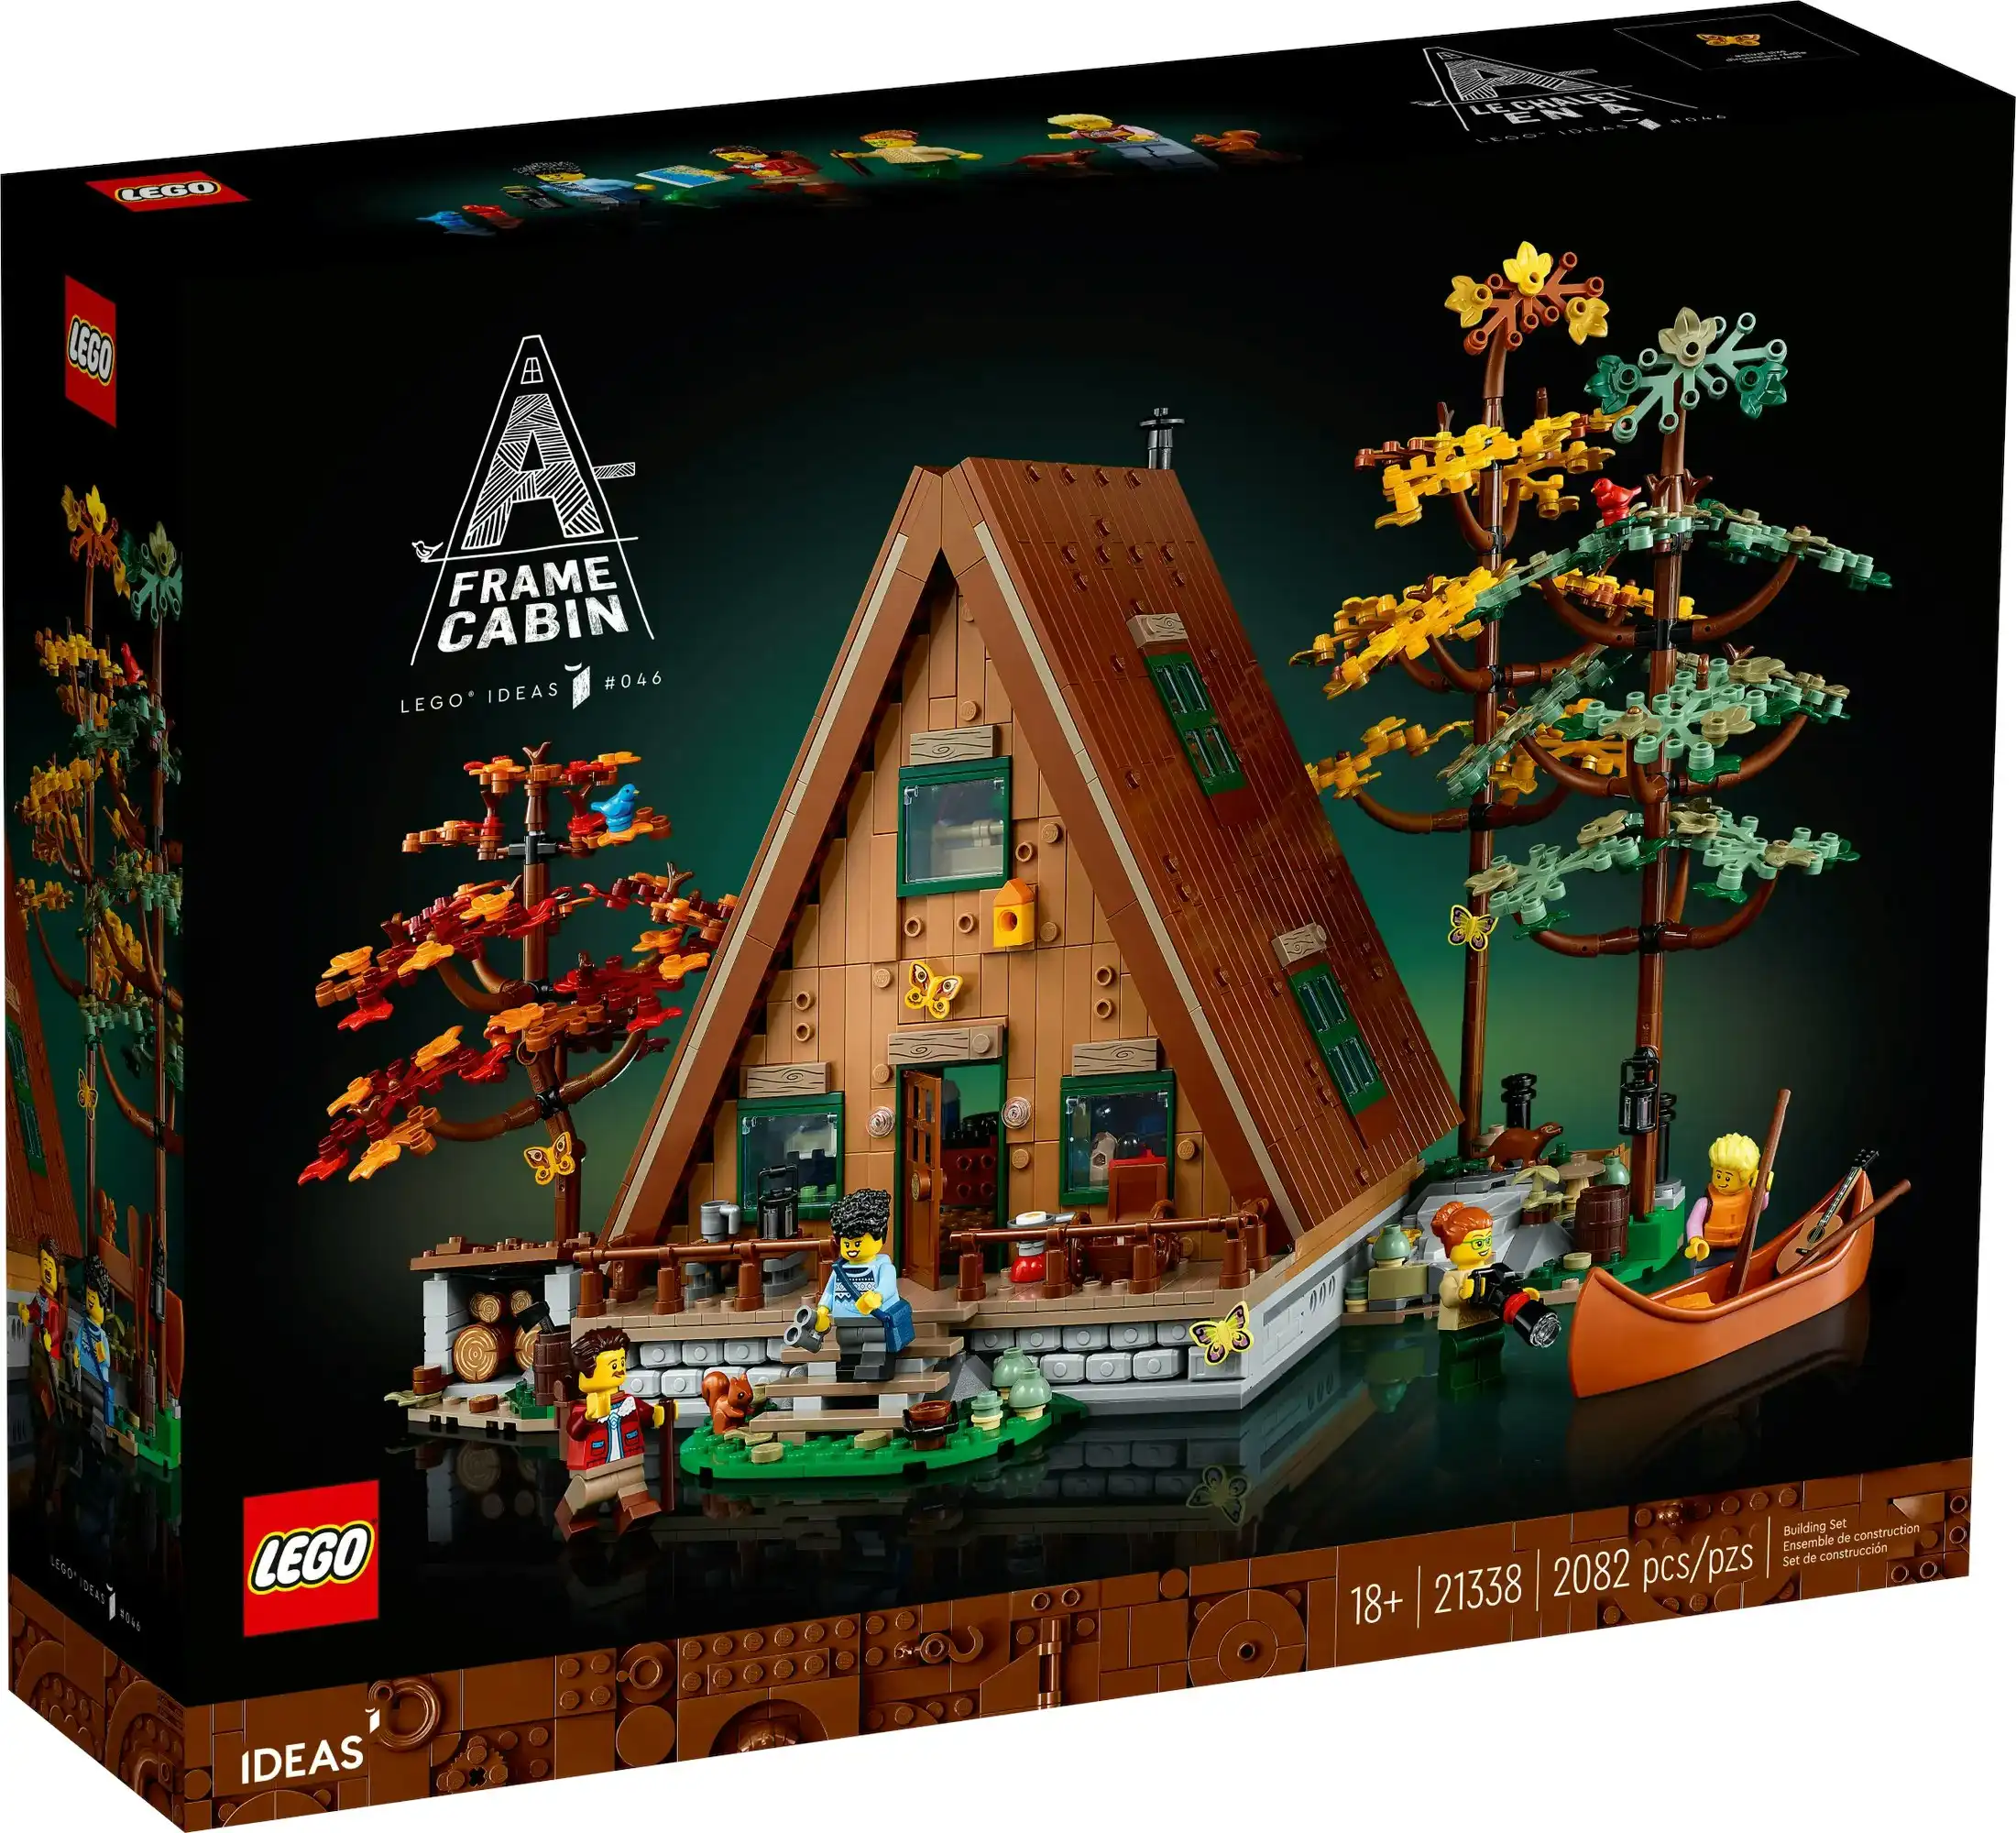 LEGO 21338 A-Frame Cabin - Ideas